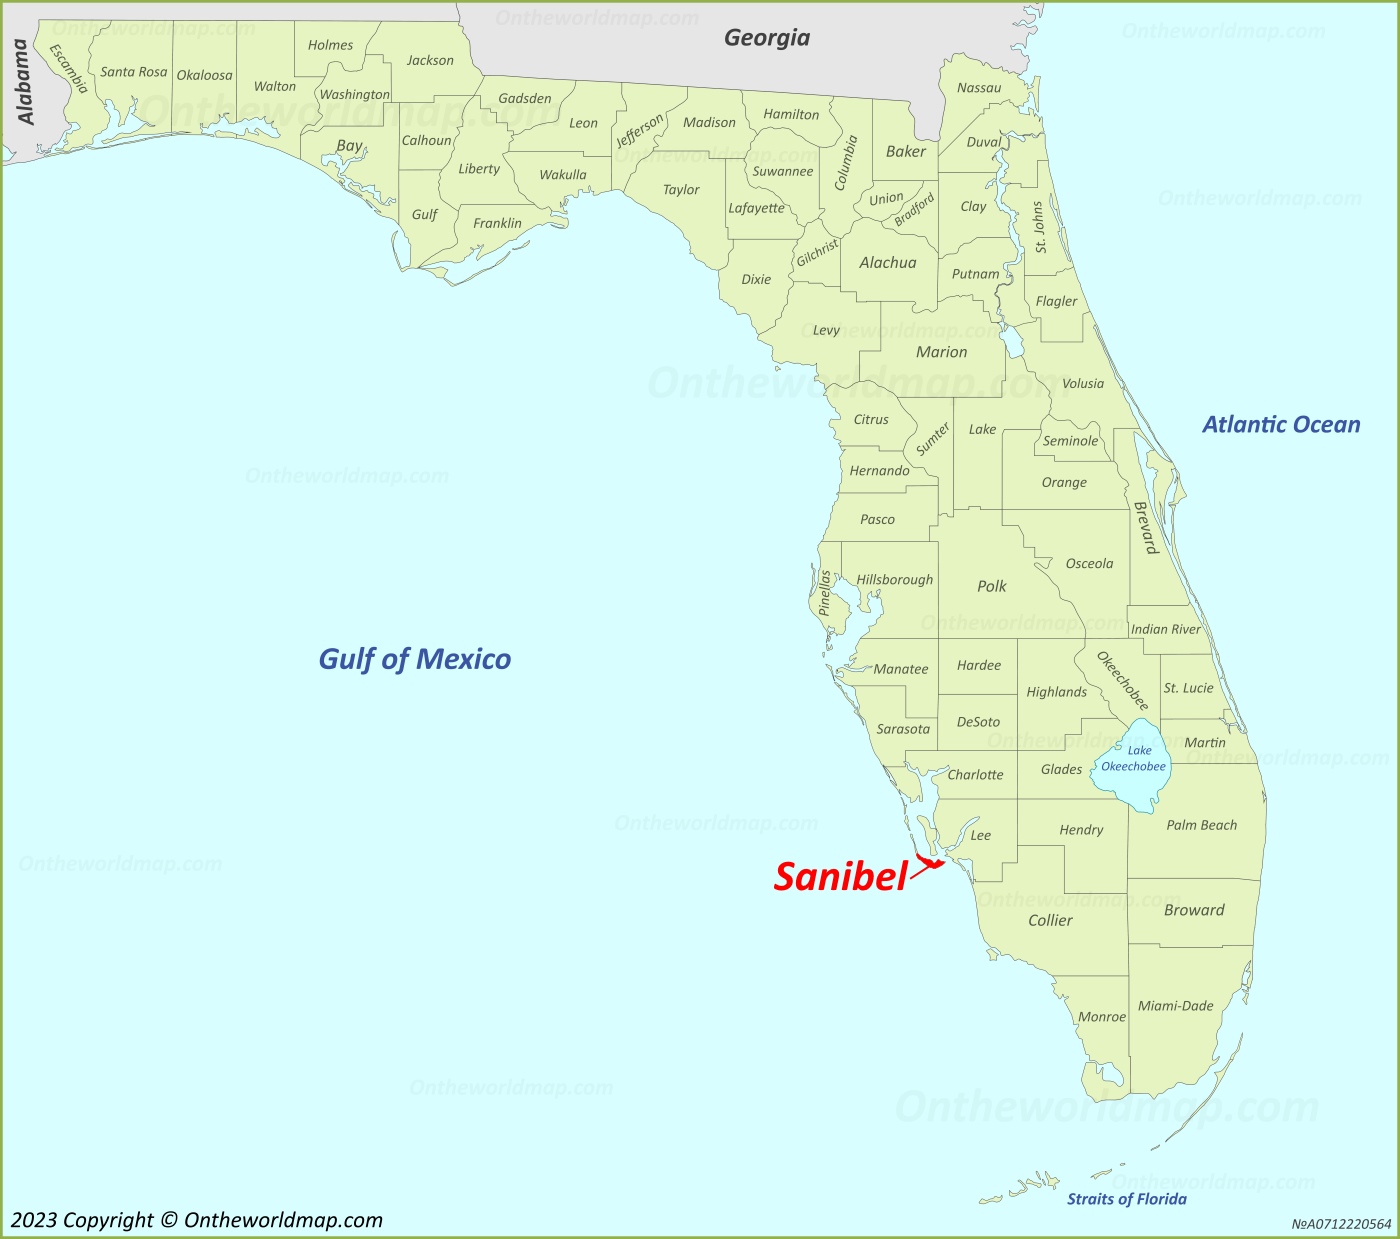 Sanibel Location On The Florida Map